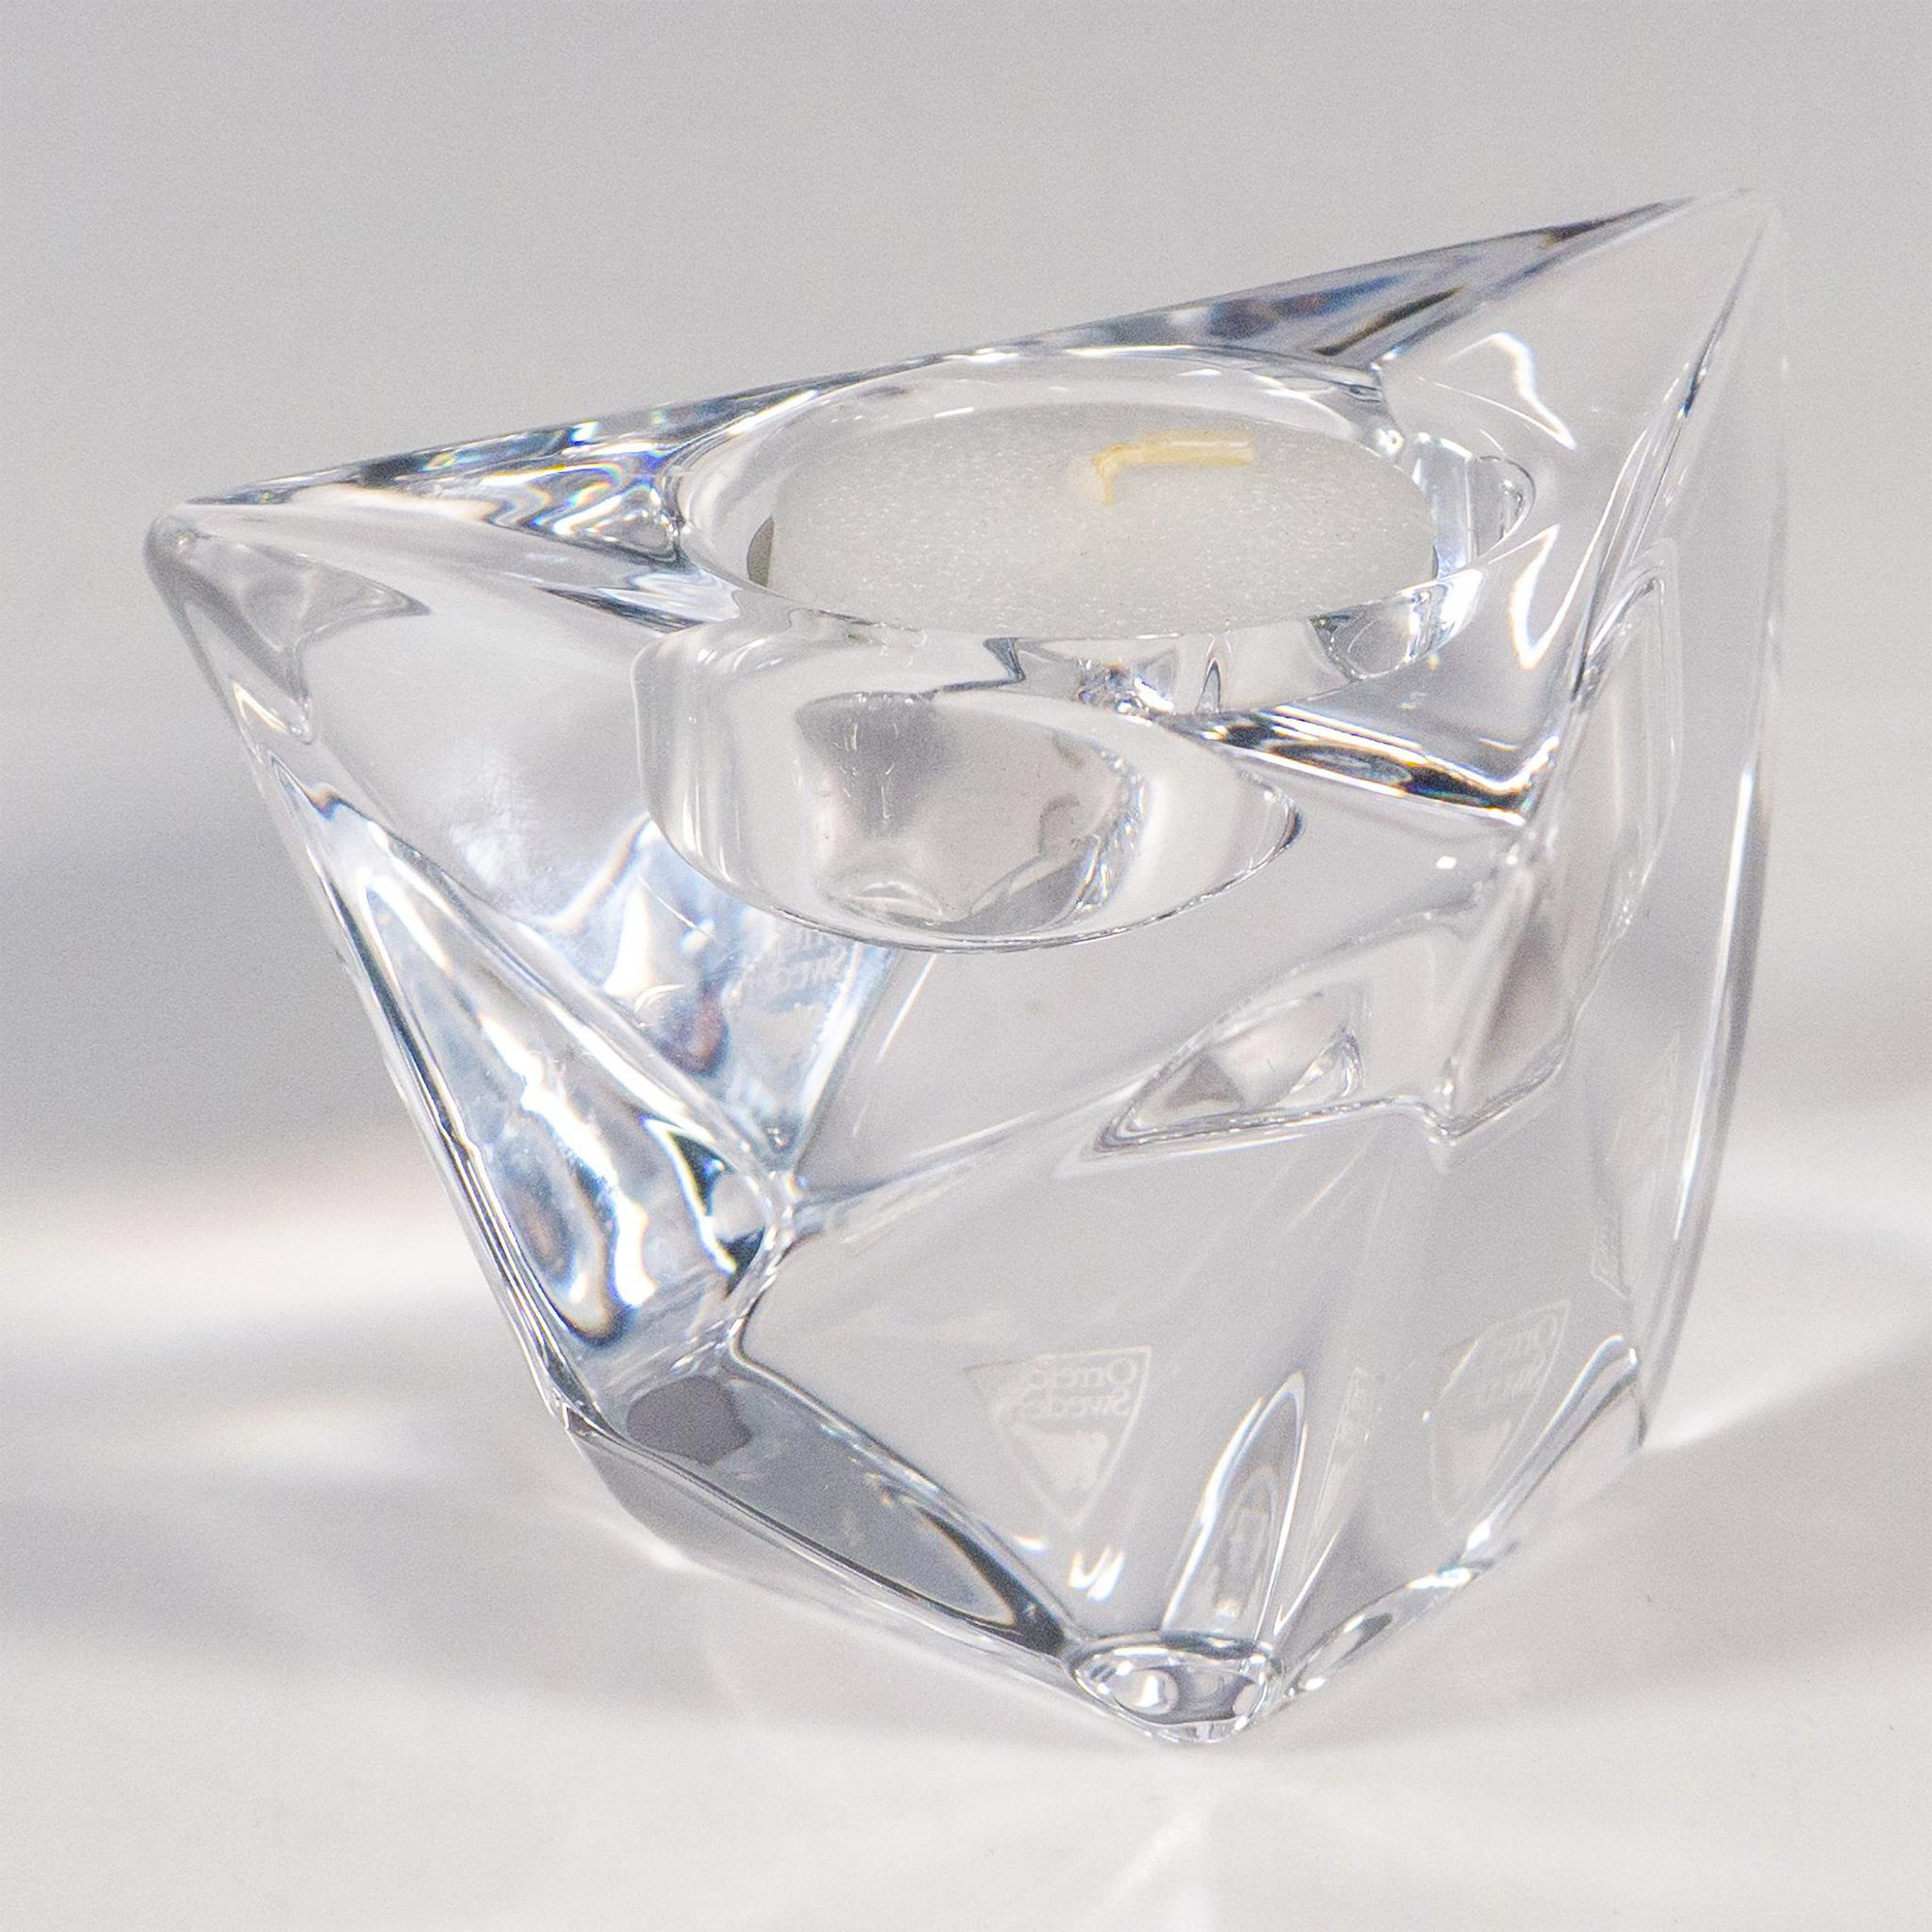 Orrefors Crystal Votive Candle Holder, Diamond - Image 3 of 4